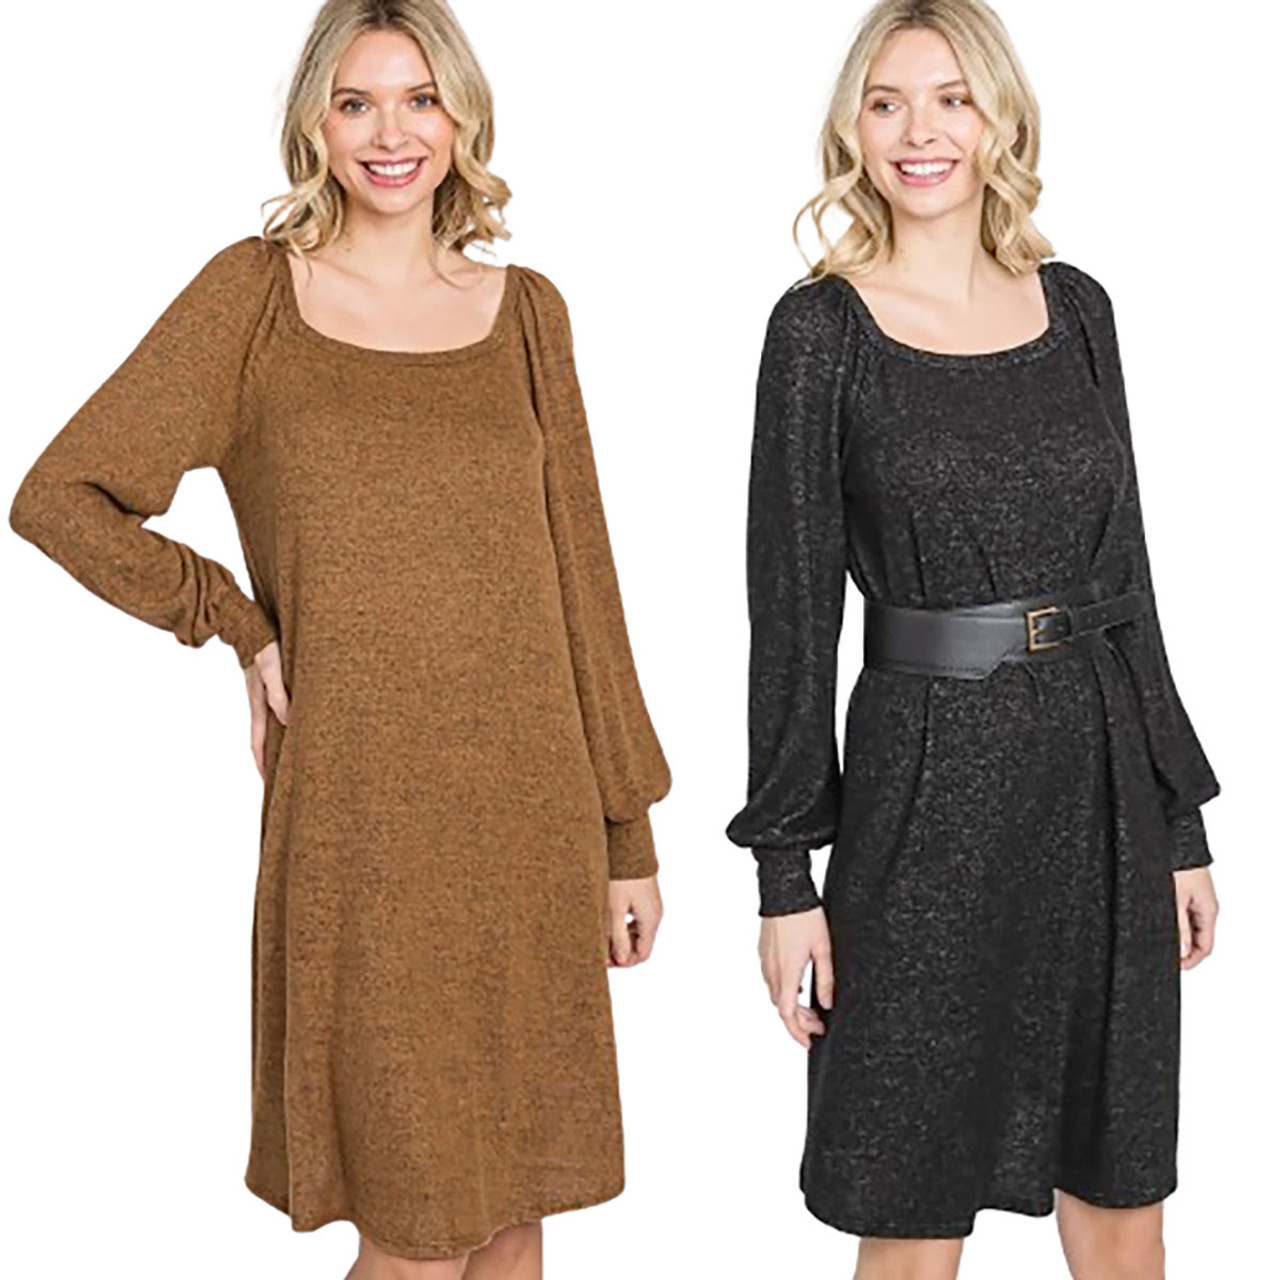 Women's Bishop Sleeve Sweater Dress product image